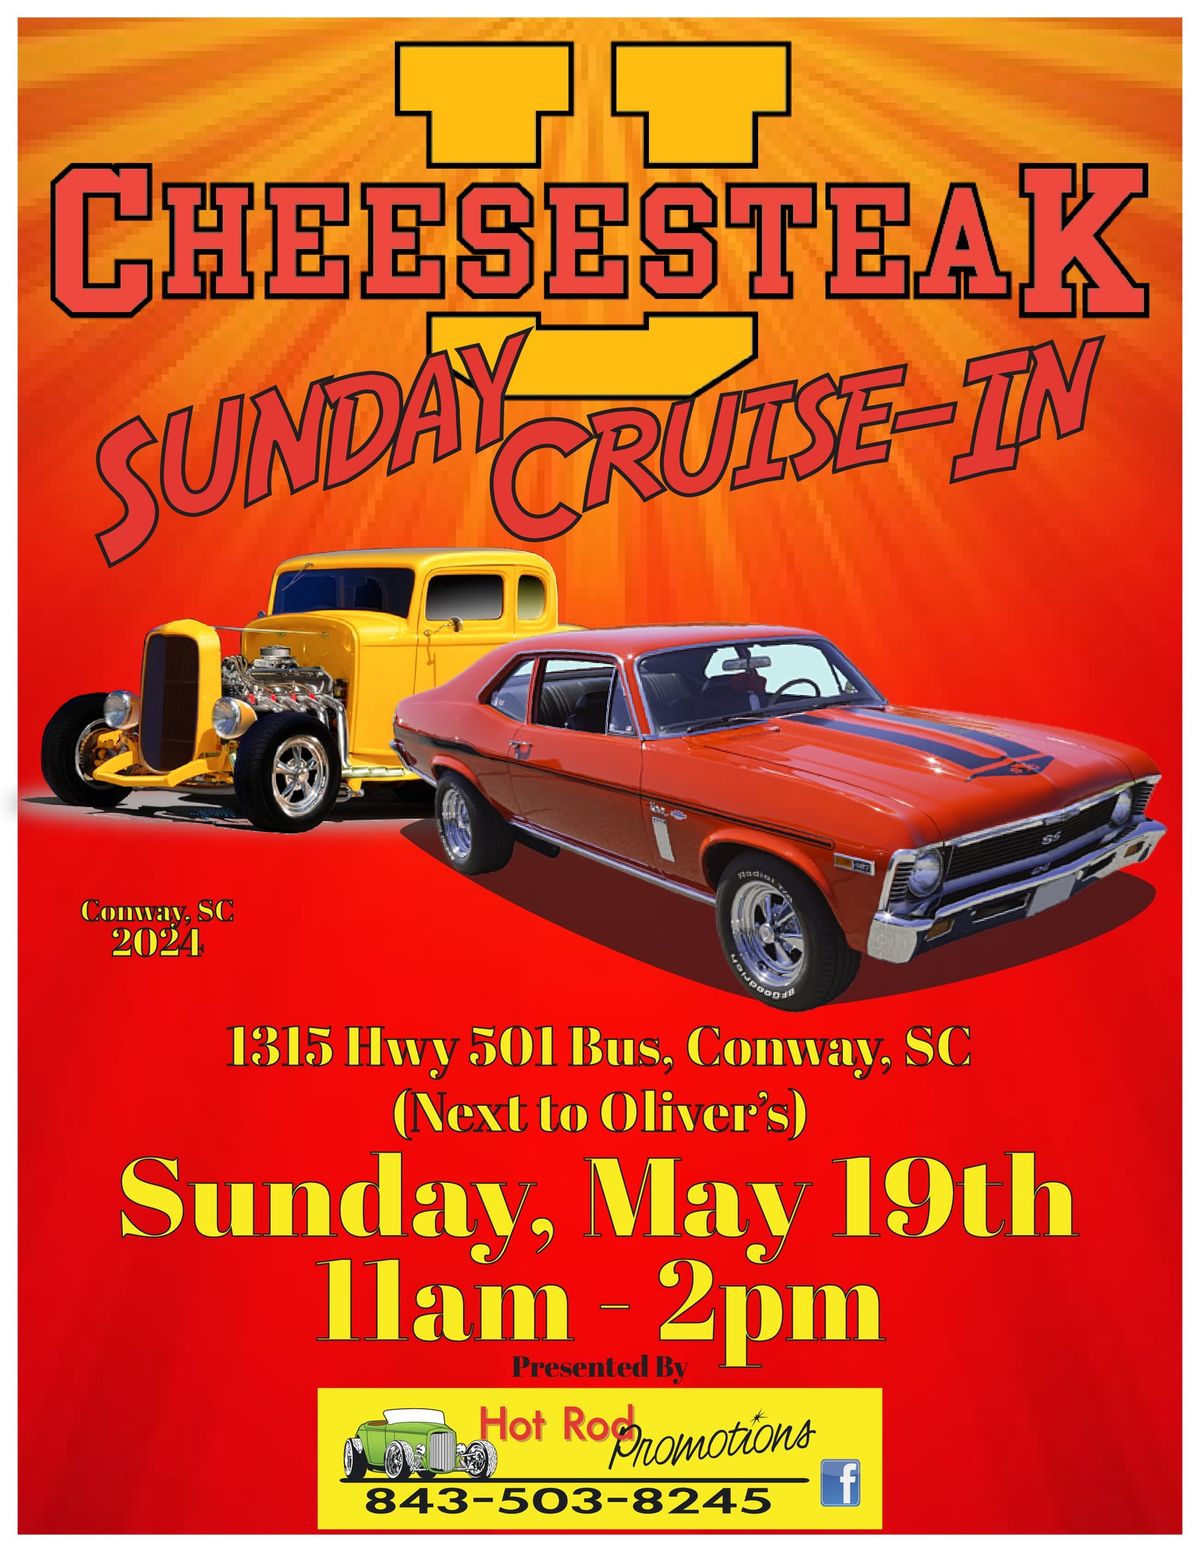 Cheesesteak U Sunday Cruise-In